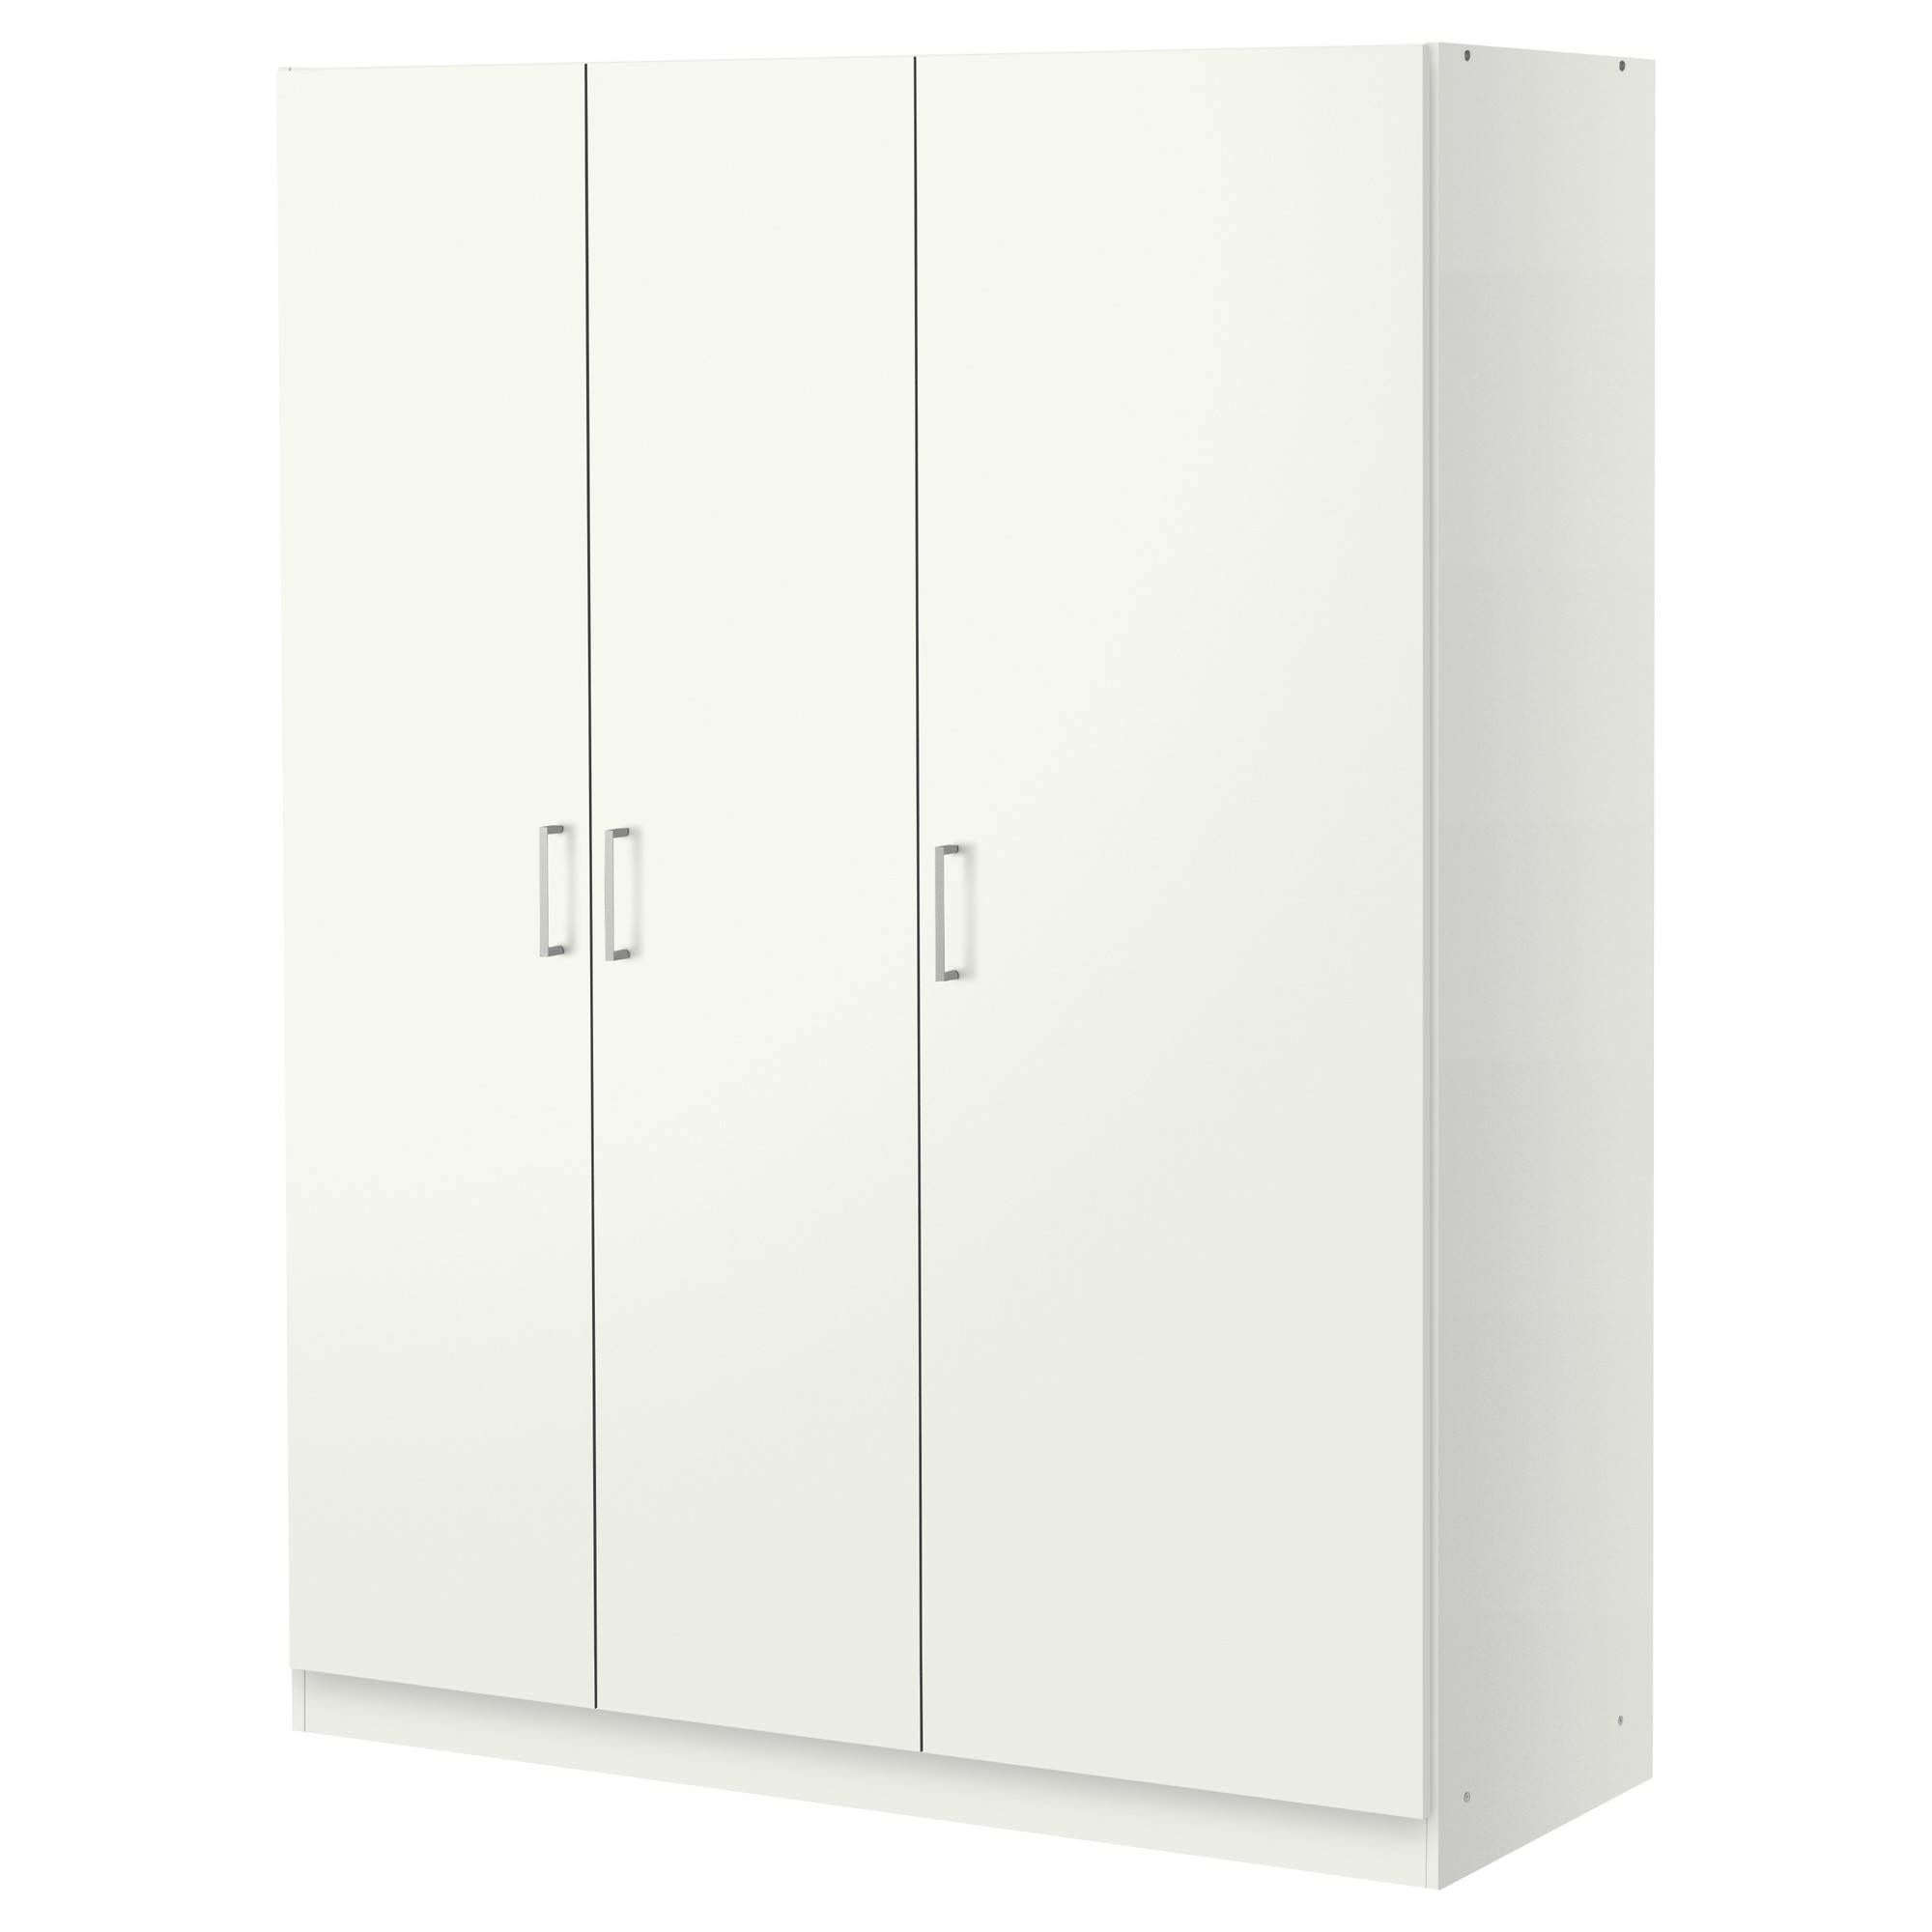 Dombås Wardrobe White 140x181 Cm – Ikea Intended For Double Rail Wardrobes Ikea (Photo 3 of 30)